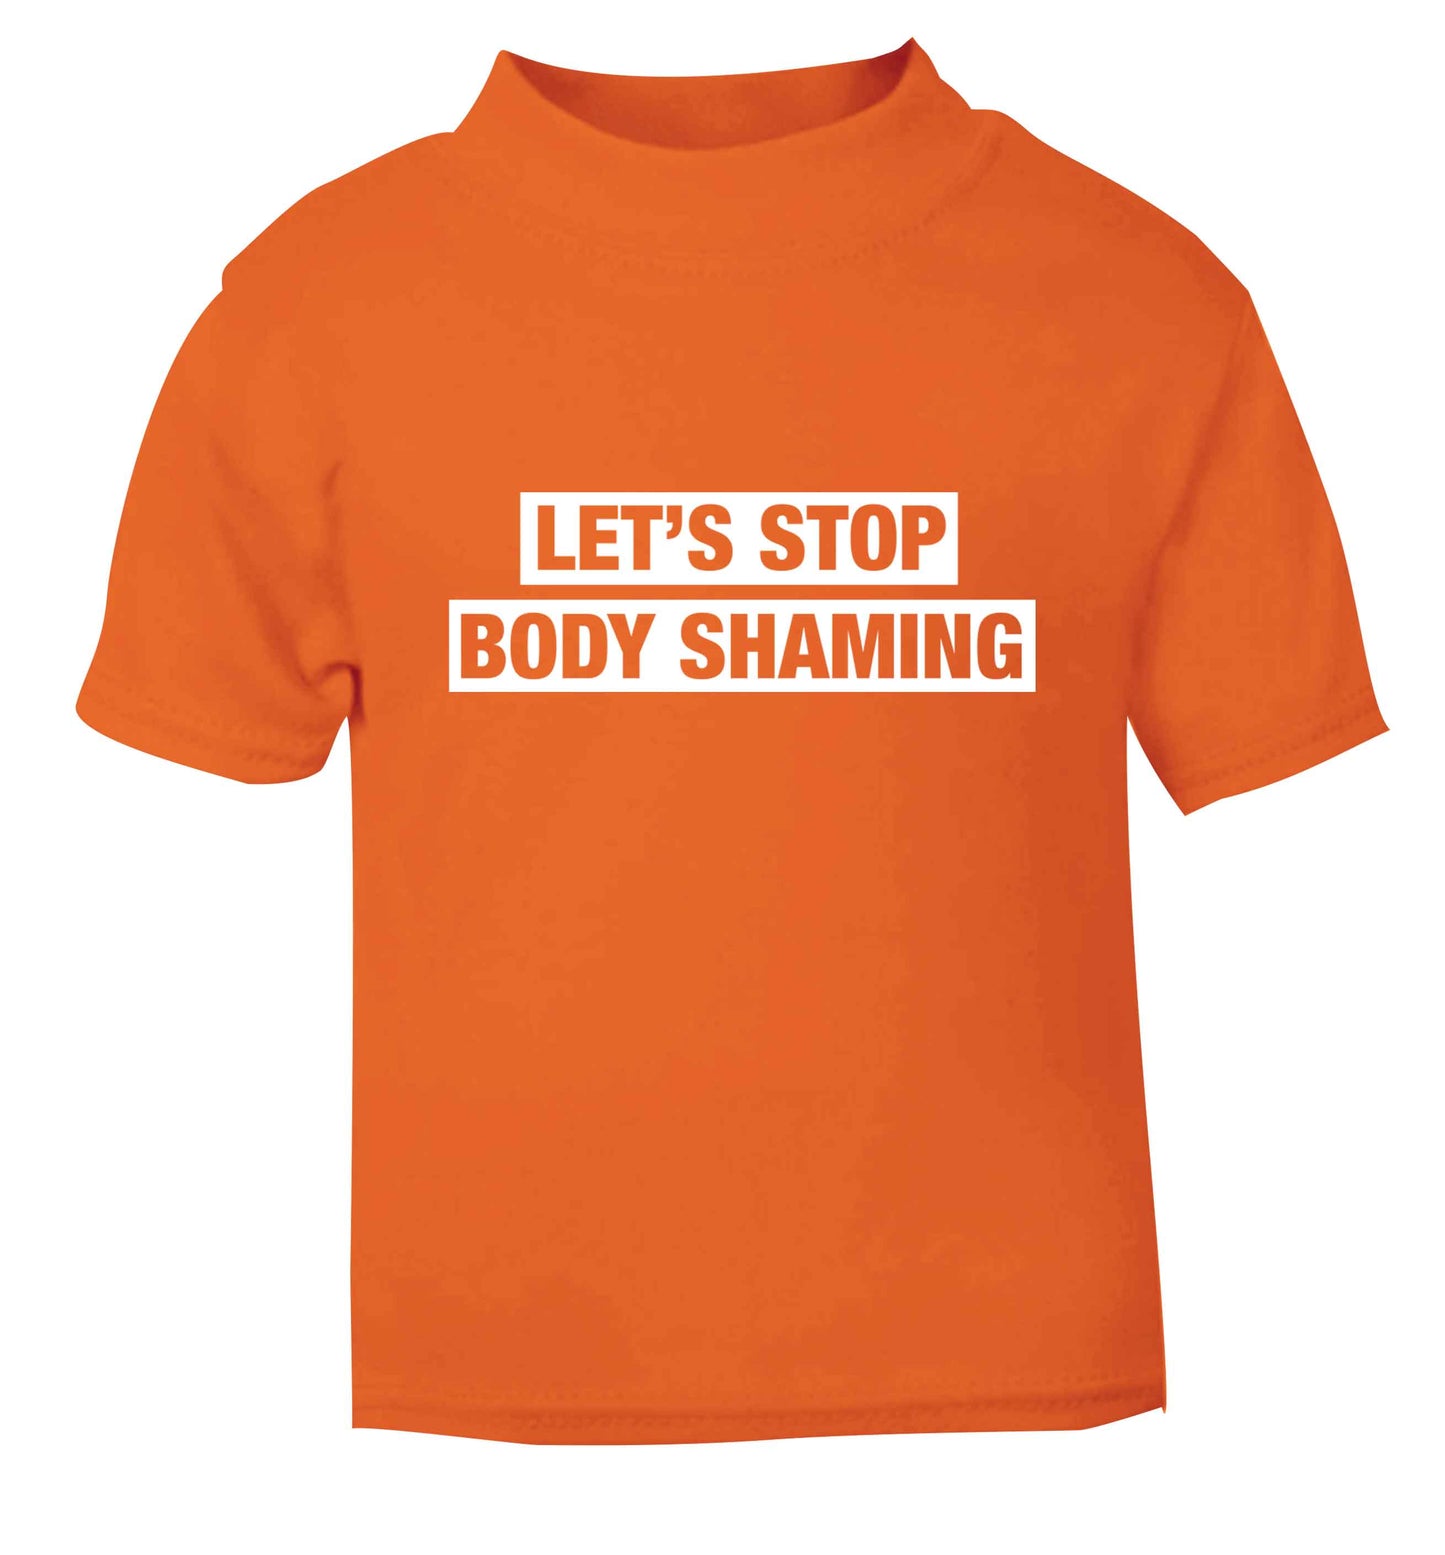 Let's stop body shaming orange baby toddler Tshirt 2 Years